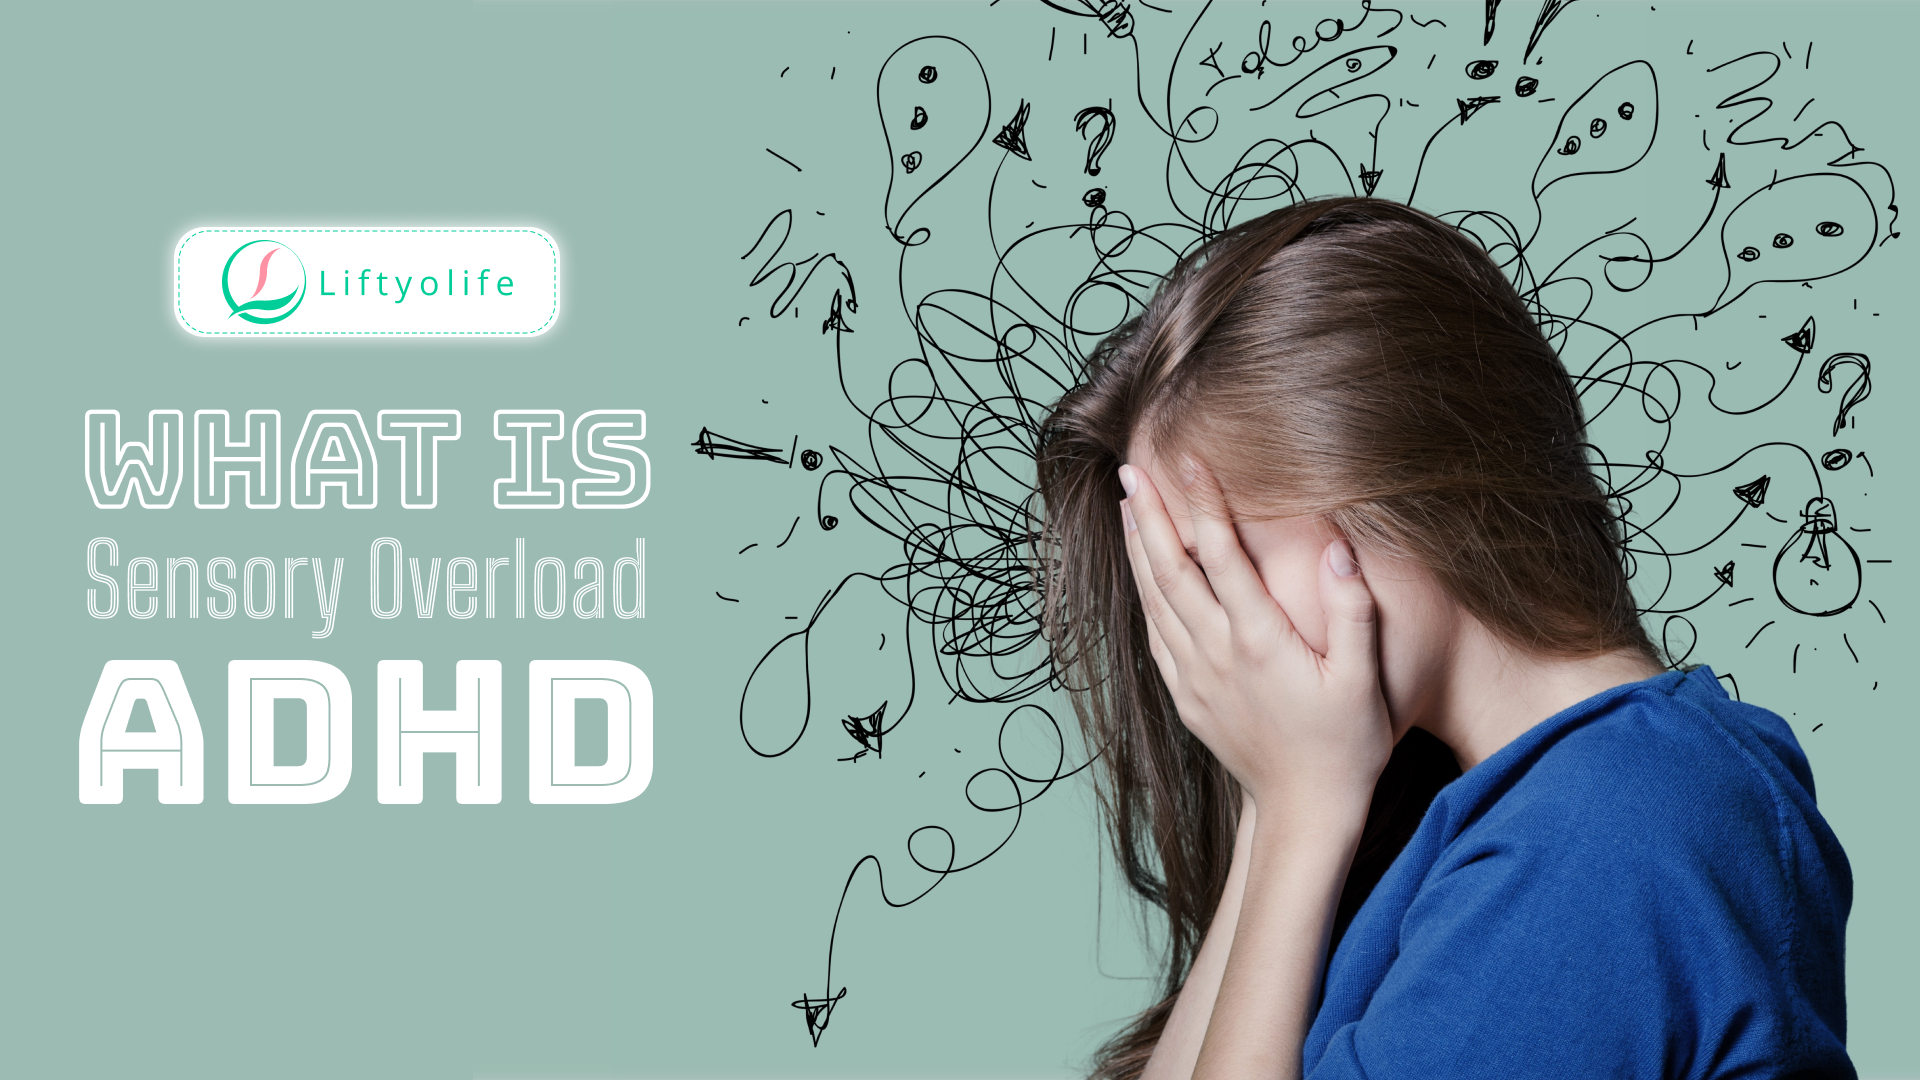 ADHD Sensory Overload: Causes, Symptoms, Treatment